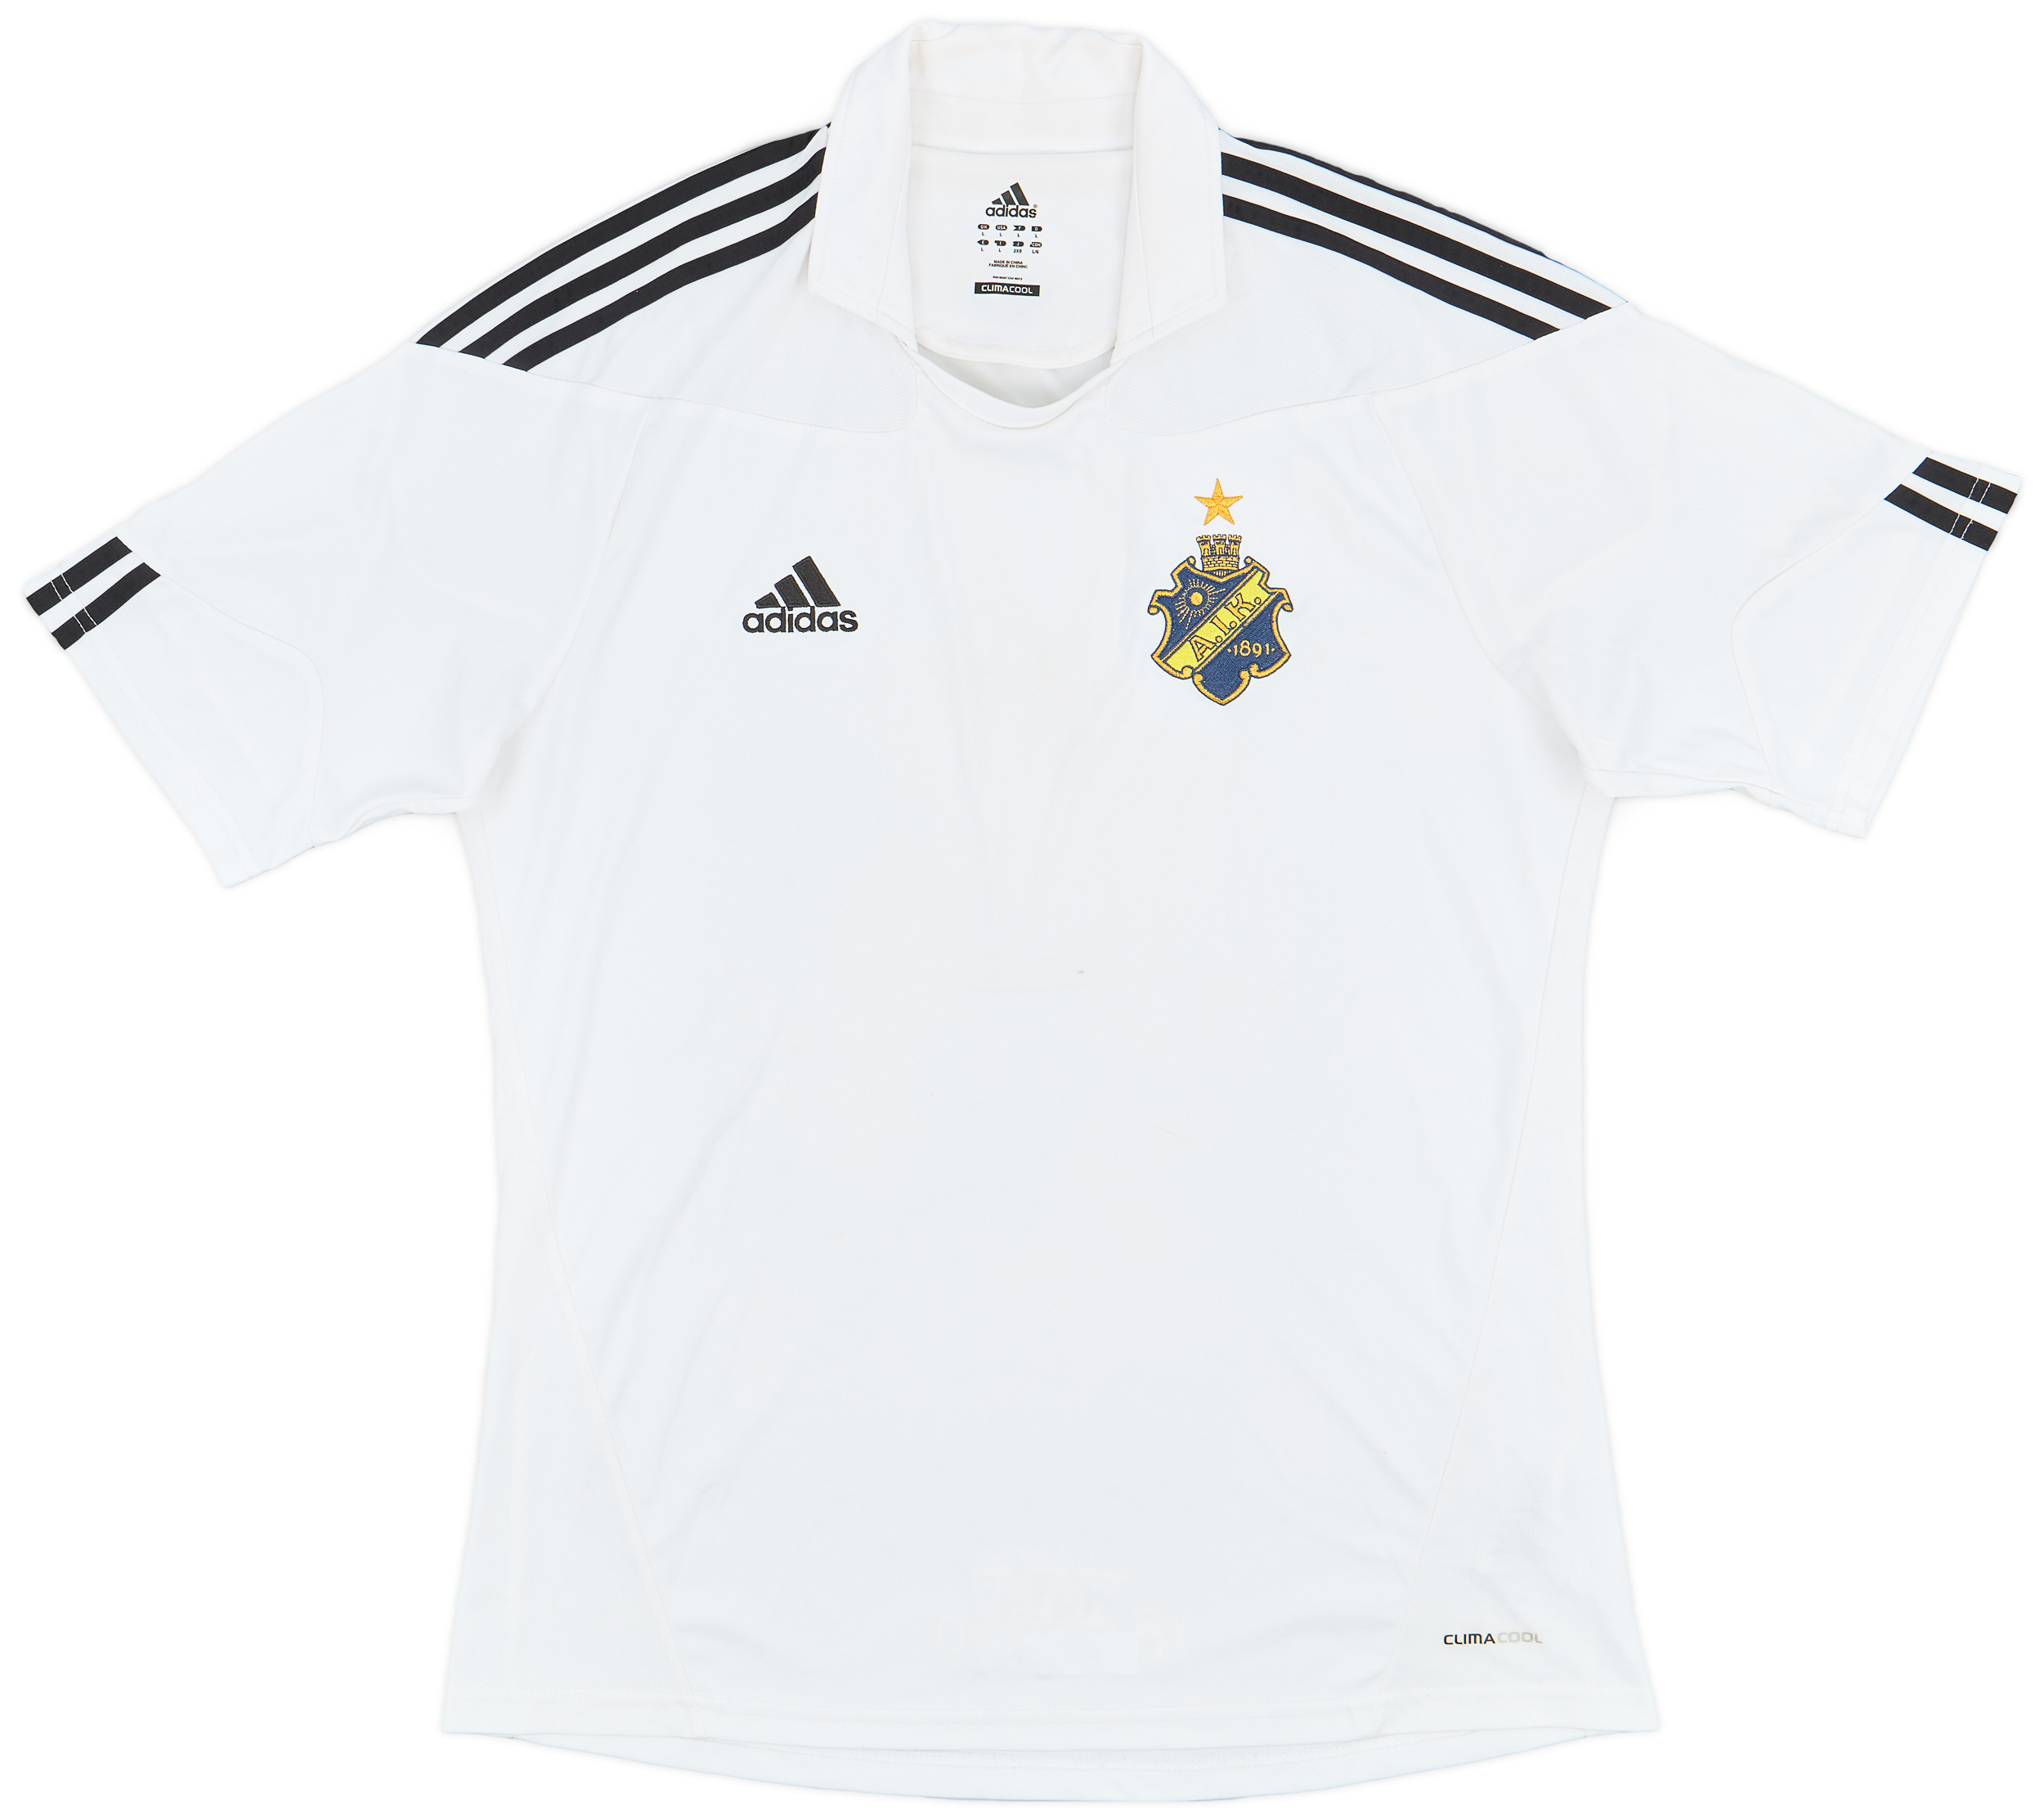 AIK Fotboll   Uit  shirt  (Original)